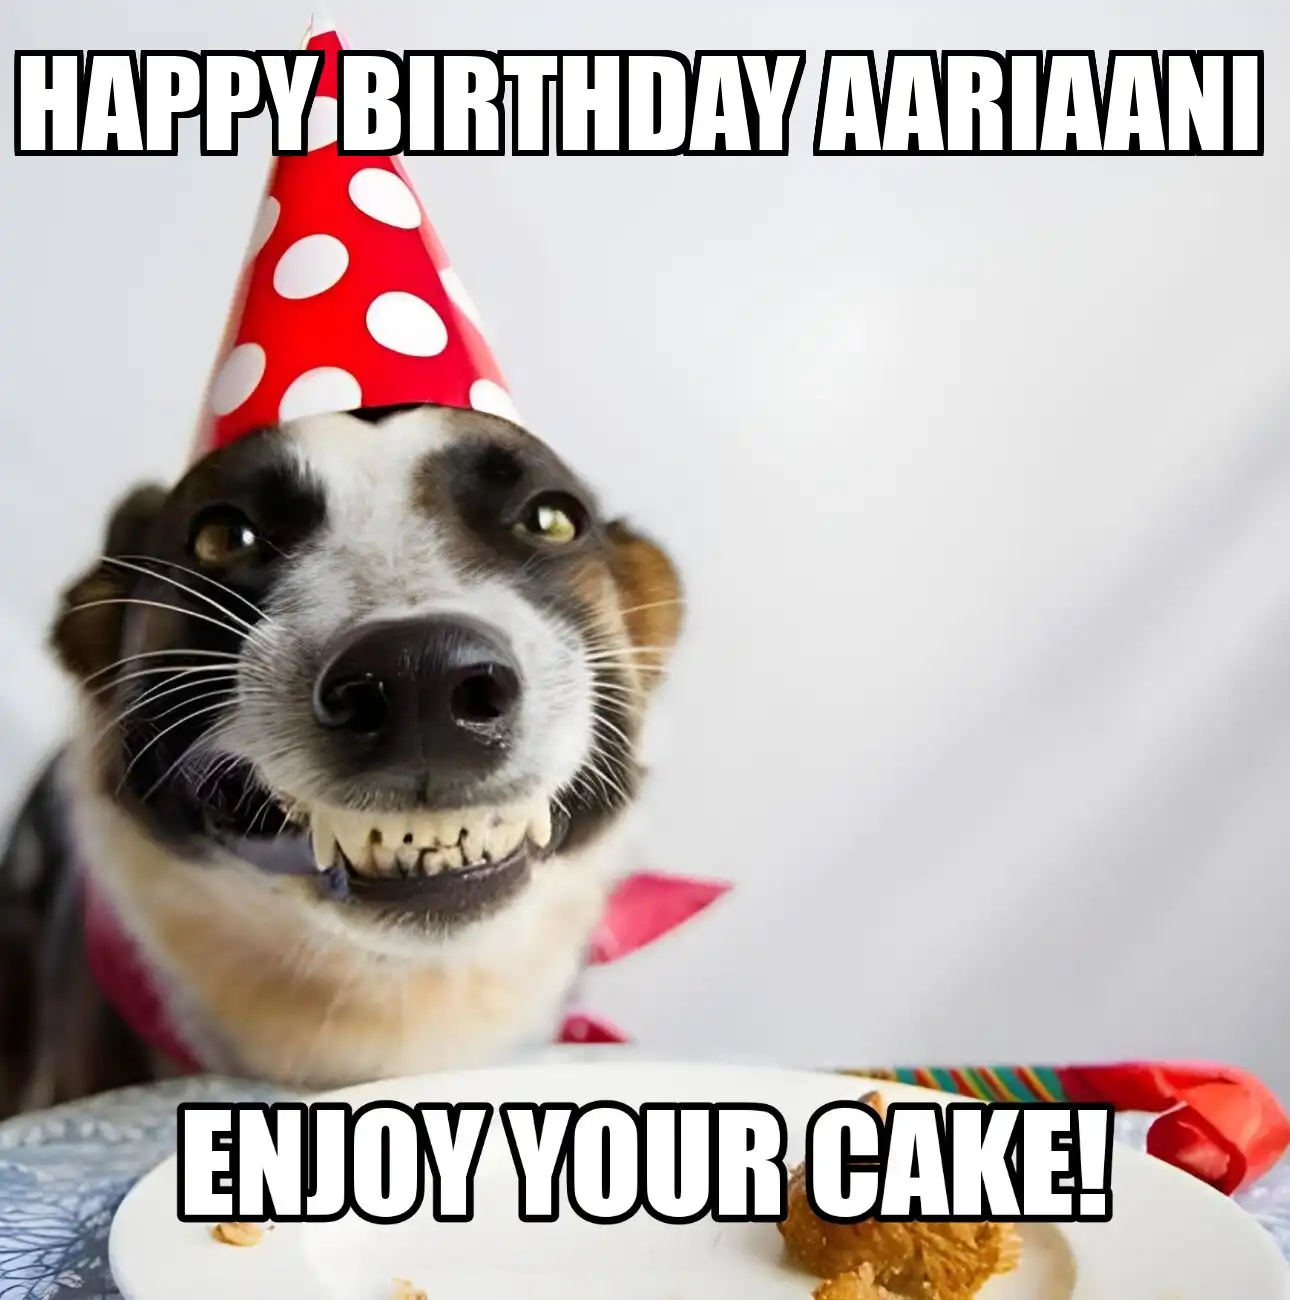 Happy Birthday Aariaani Enjoy Your Cake Dog Meme